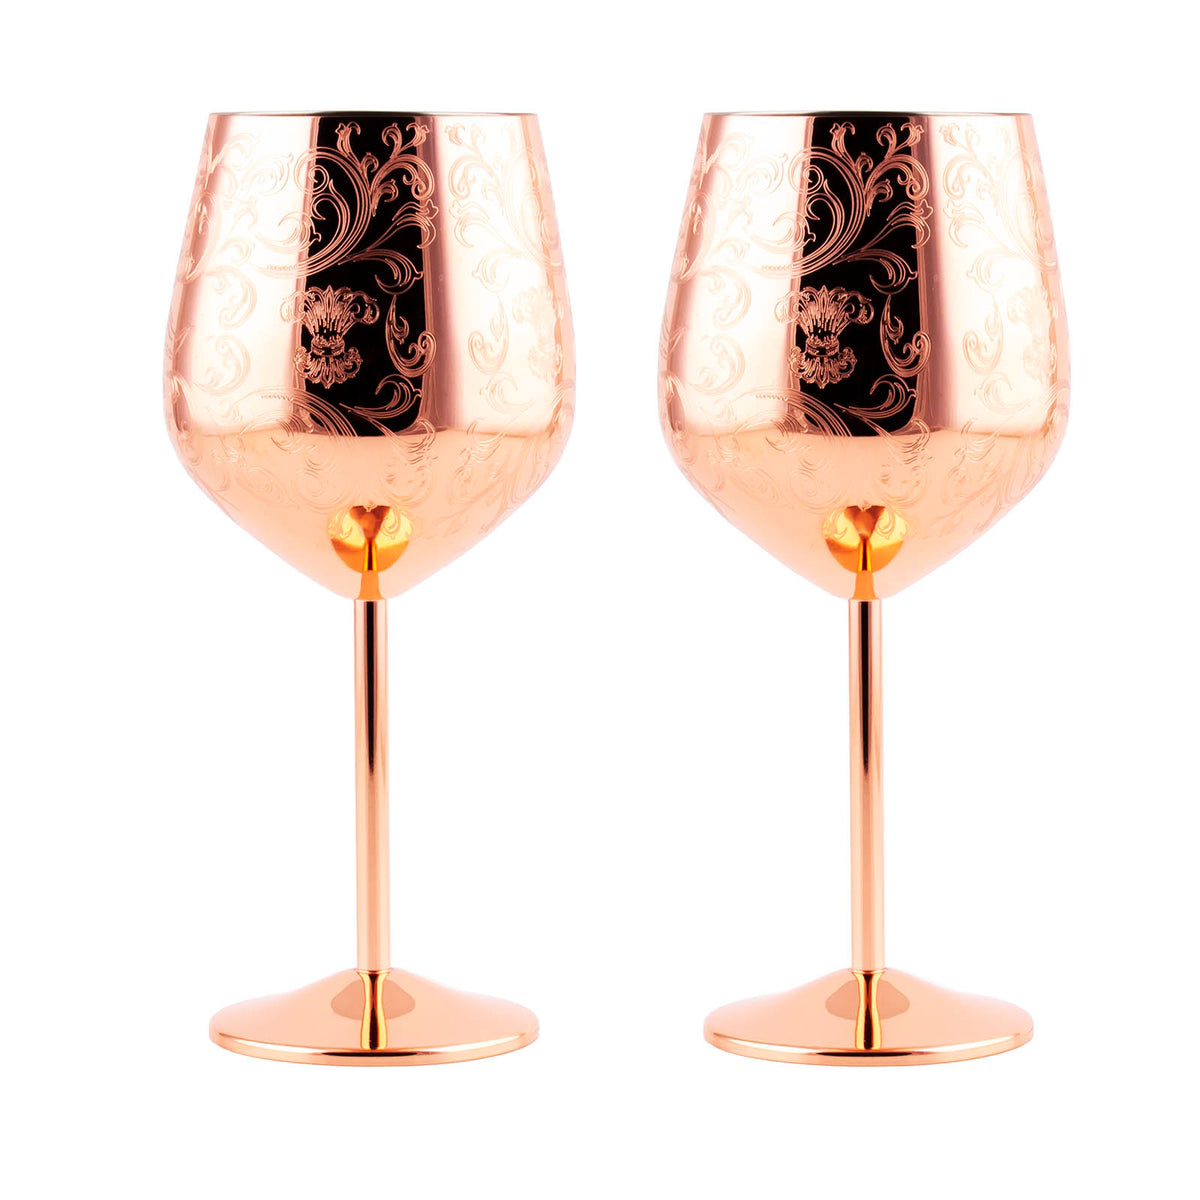 Stemless Wine Glass Set, Elegant Drinkware with Metallic Copper